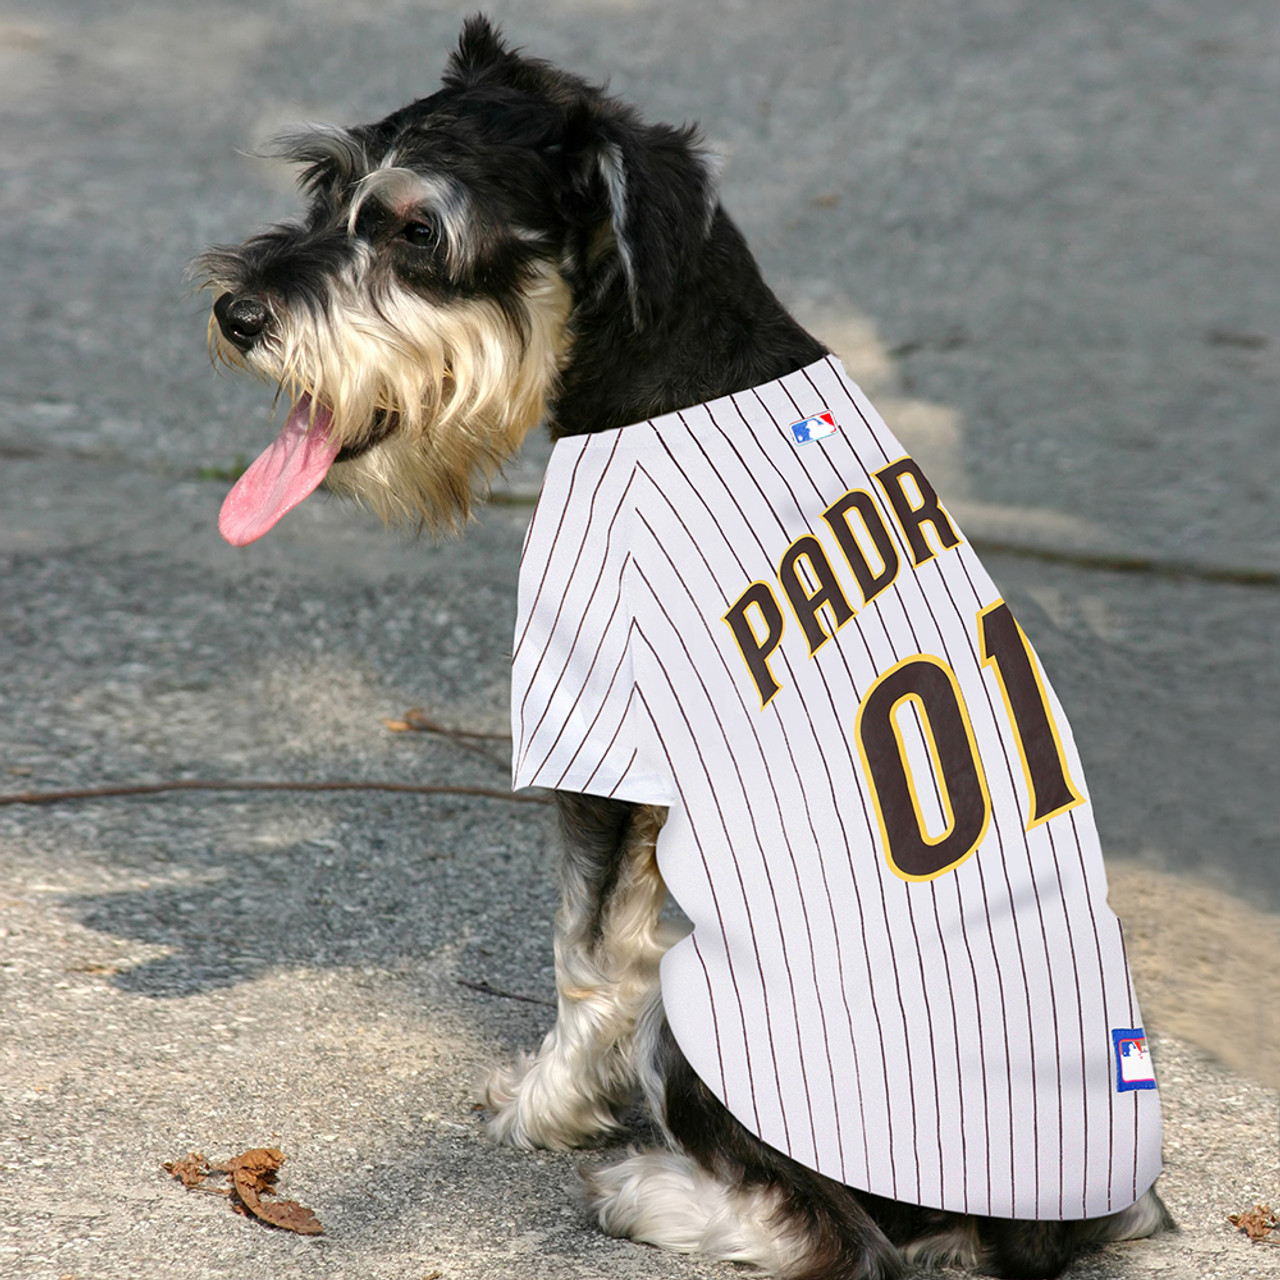 San Diego Padres Dog Reversible Tee Shirt